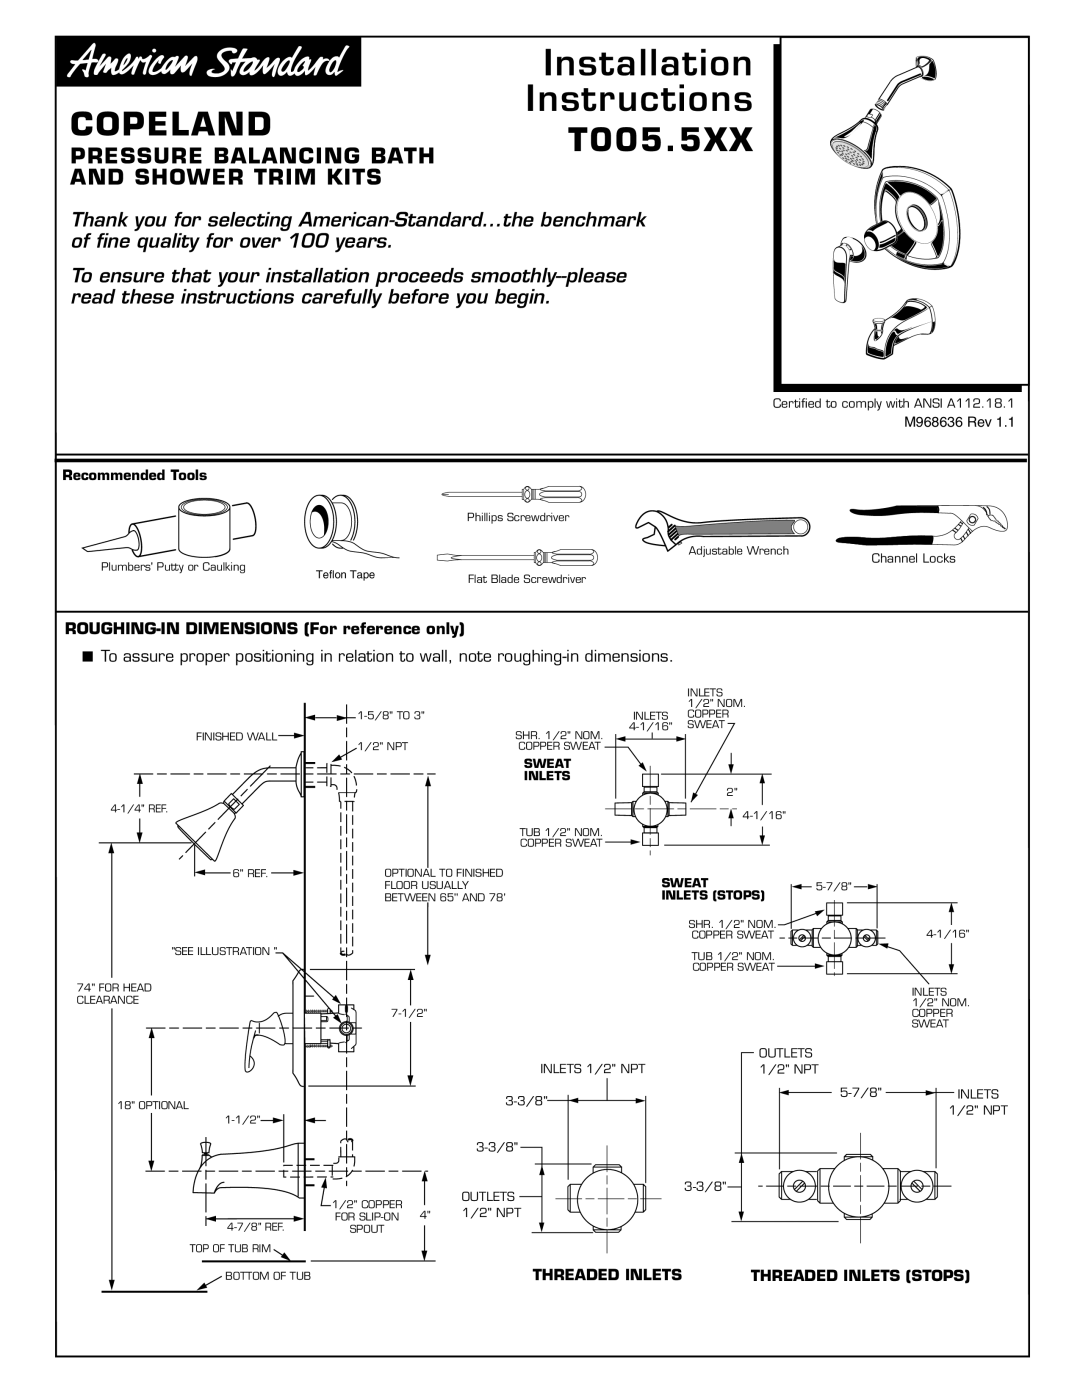 American Standard T005.5XX dimensions Copeland, Installation, Instructions, Pressure Balancing Bath, And Shower Trim Kits 